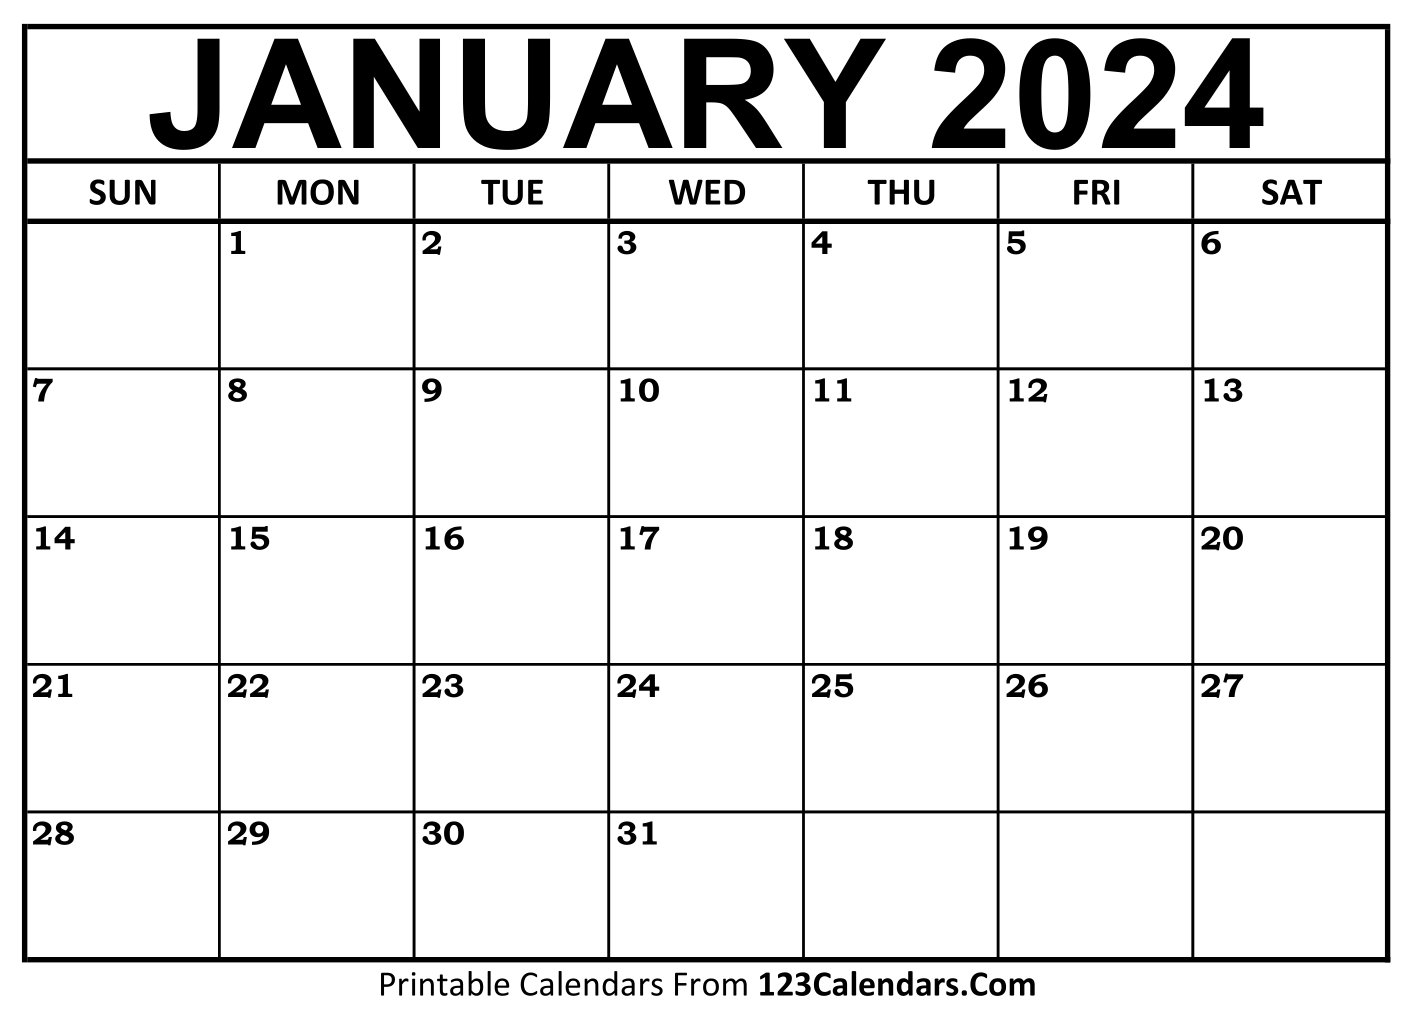 Printable January 2024 Calendar Templates - 123Calendars for Blank Calendar January 2024 Printable